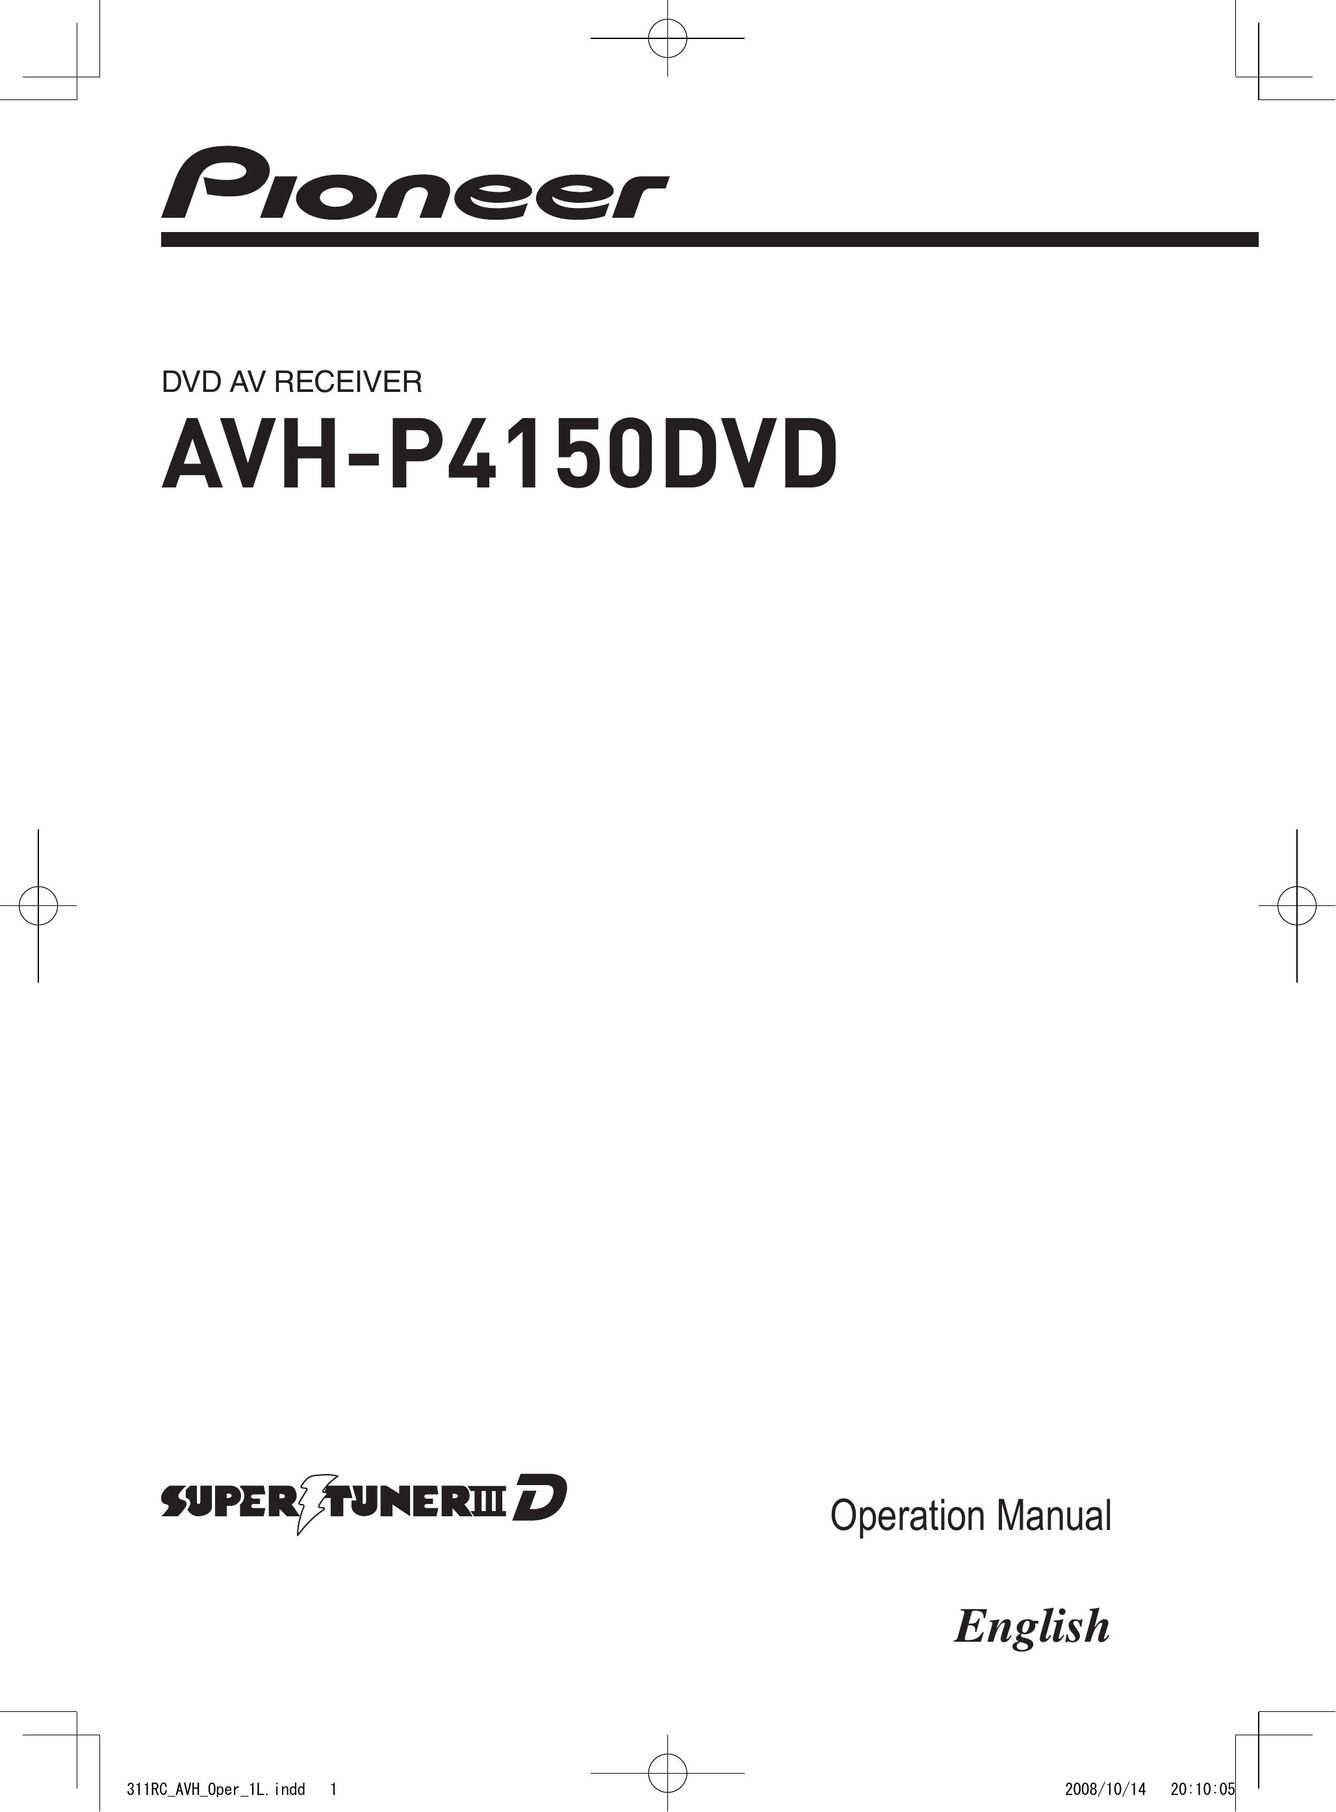 Pioneer AVH-P4150DVD Car Video System User Manual